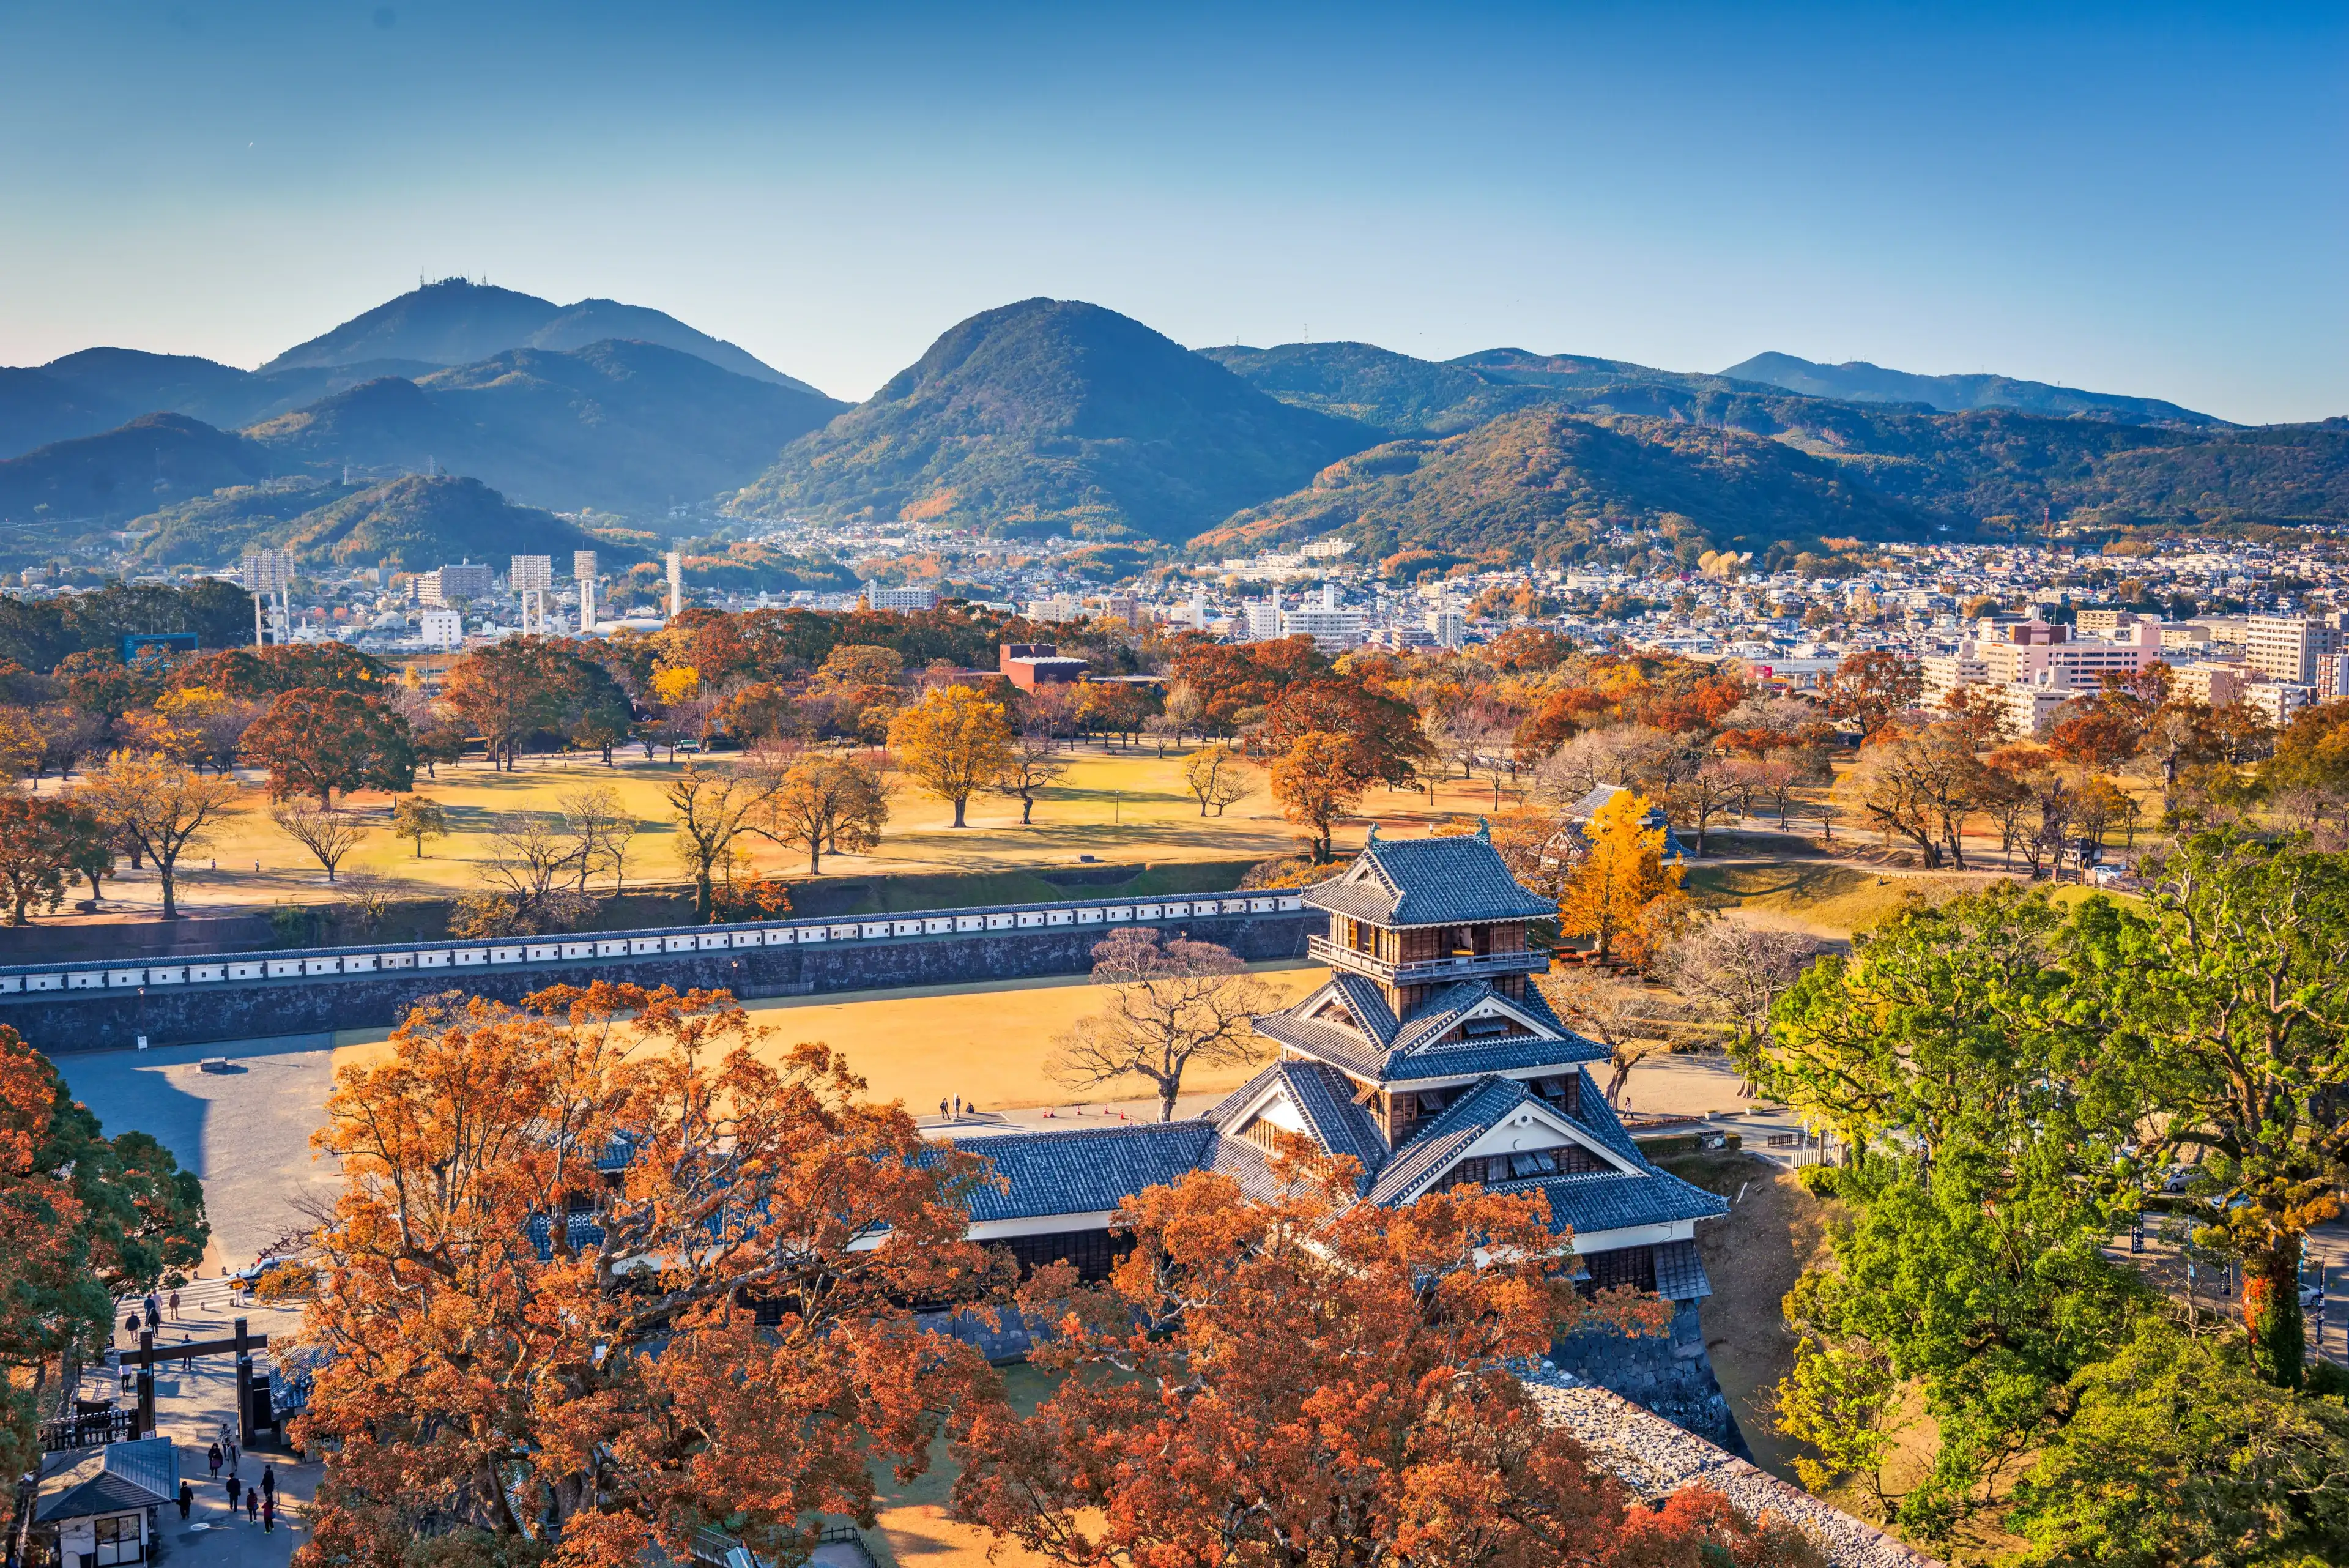 Kumamoto Castle Turret and the landscape of Kumamoto, Japan in autumn.